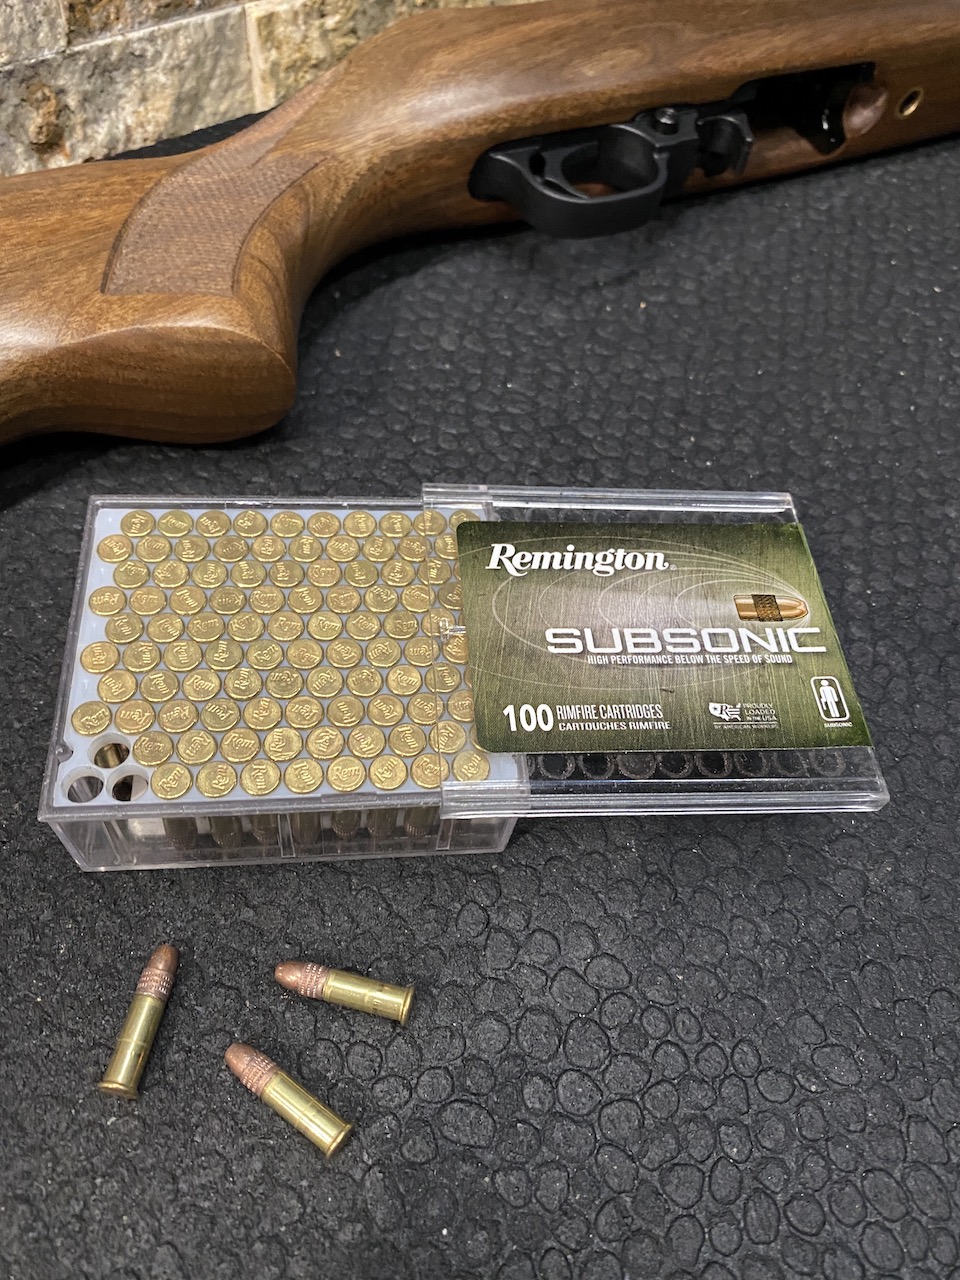 Remington Ammunition Tested